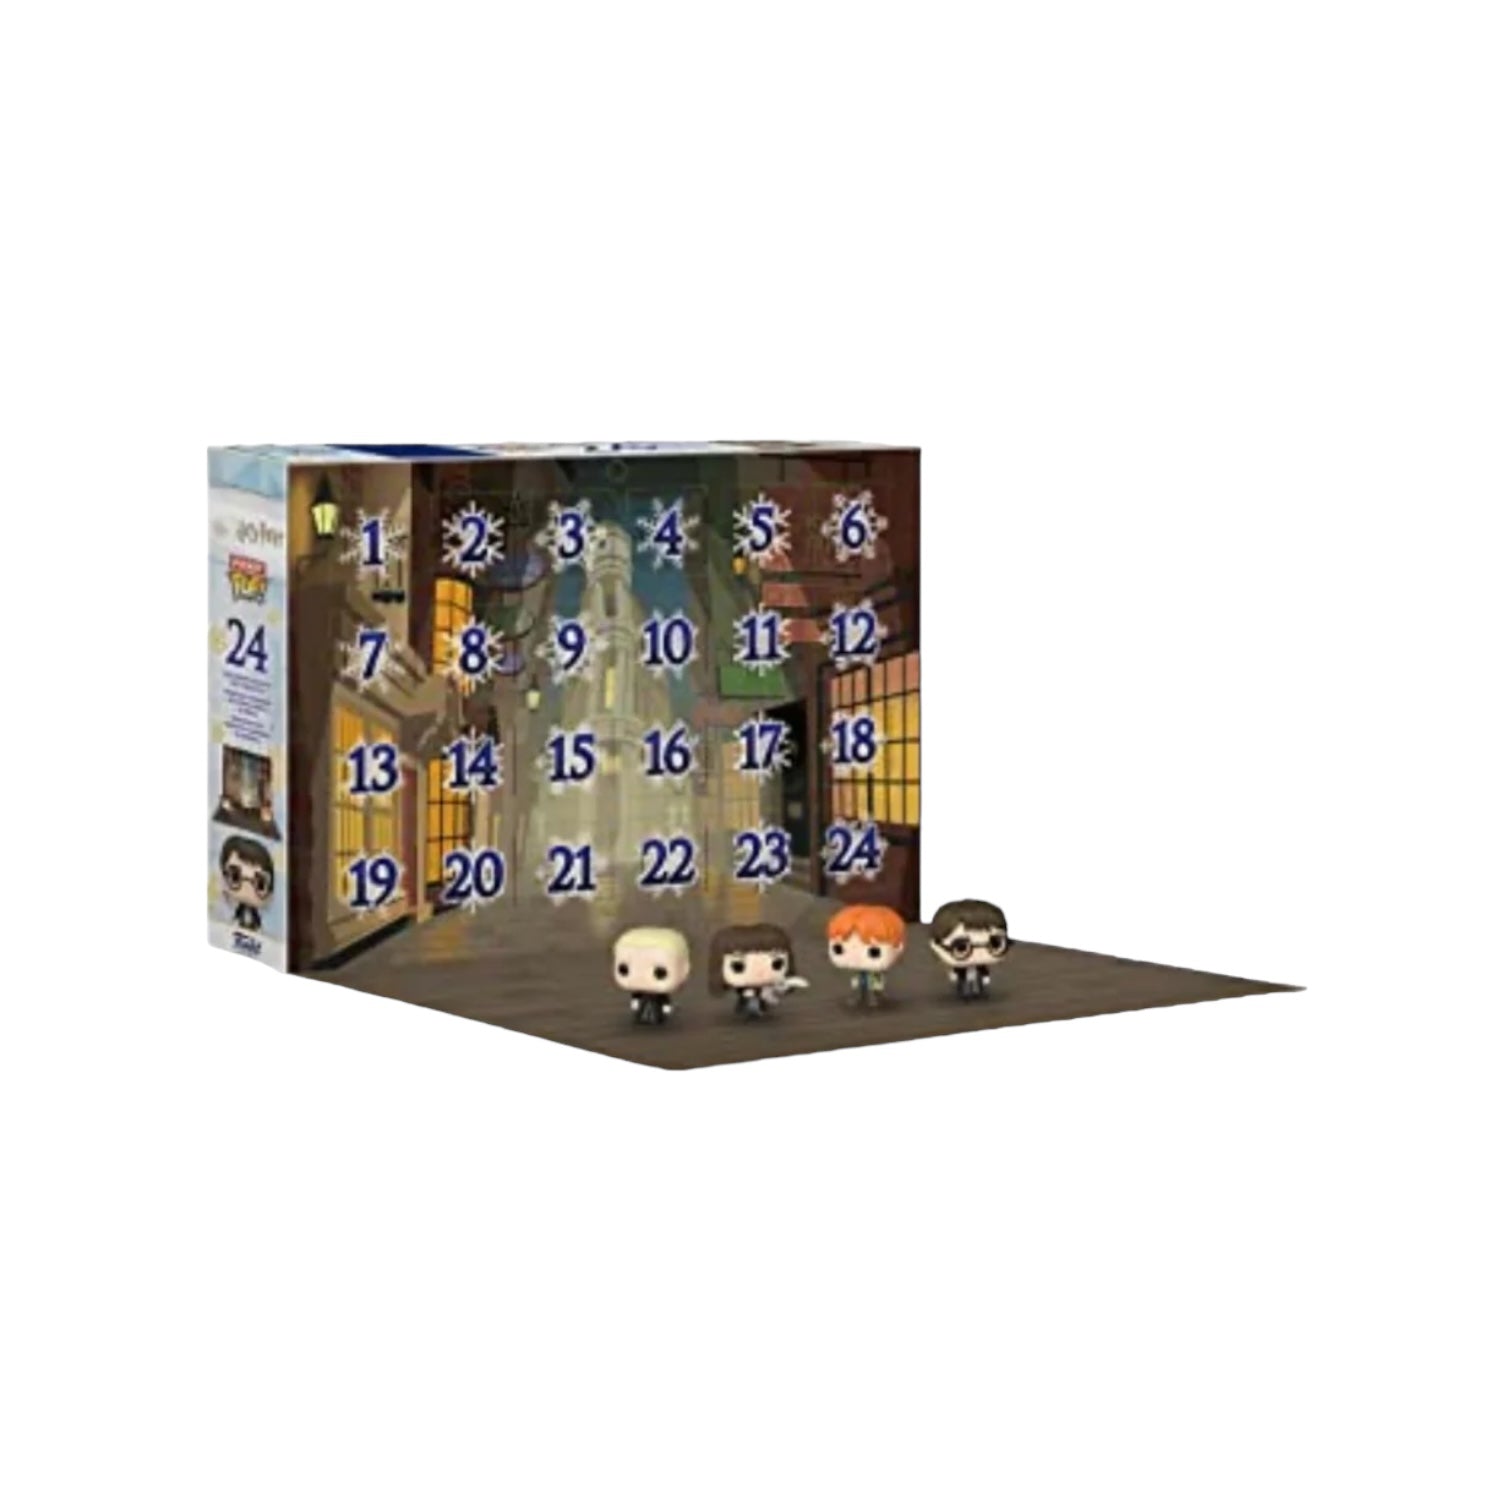 SALE - Harry Potter 2022 Funko Pocket Pop! Advent Calendar - Harry Potter